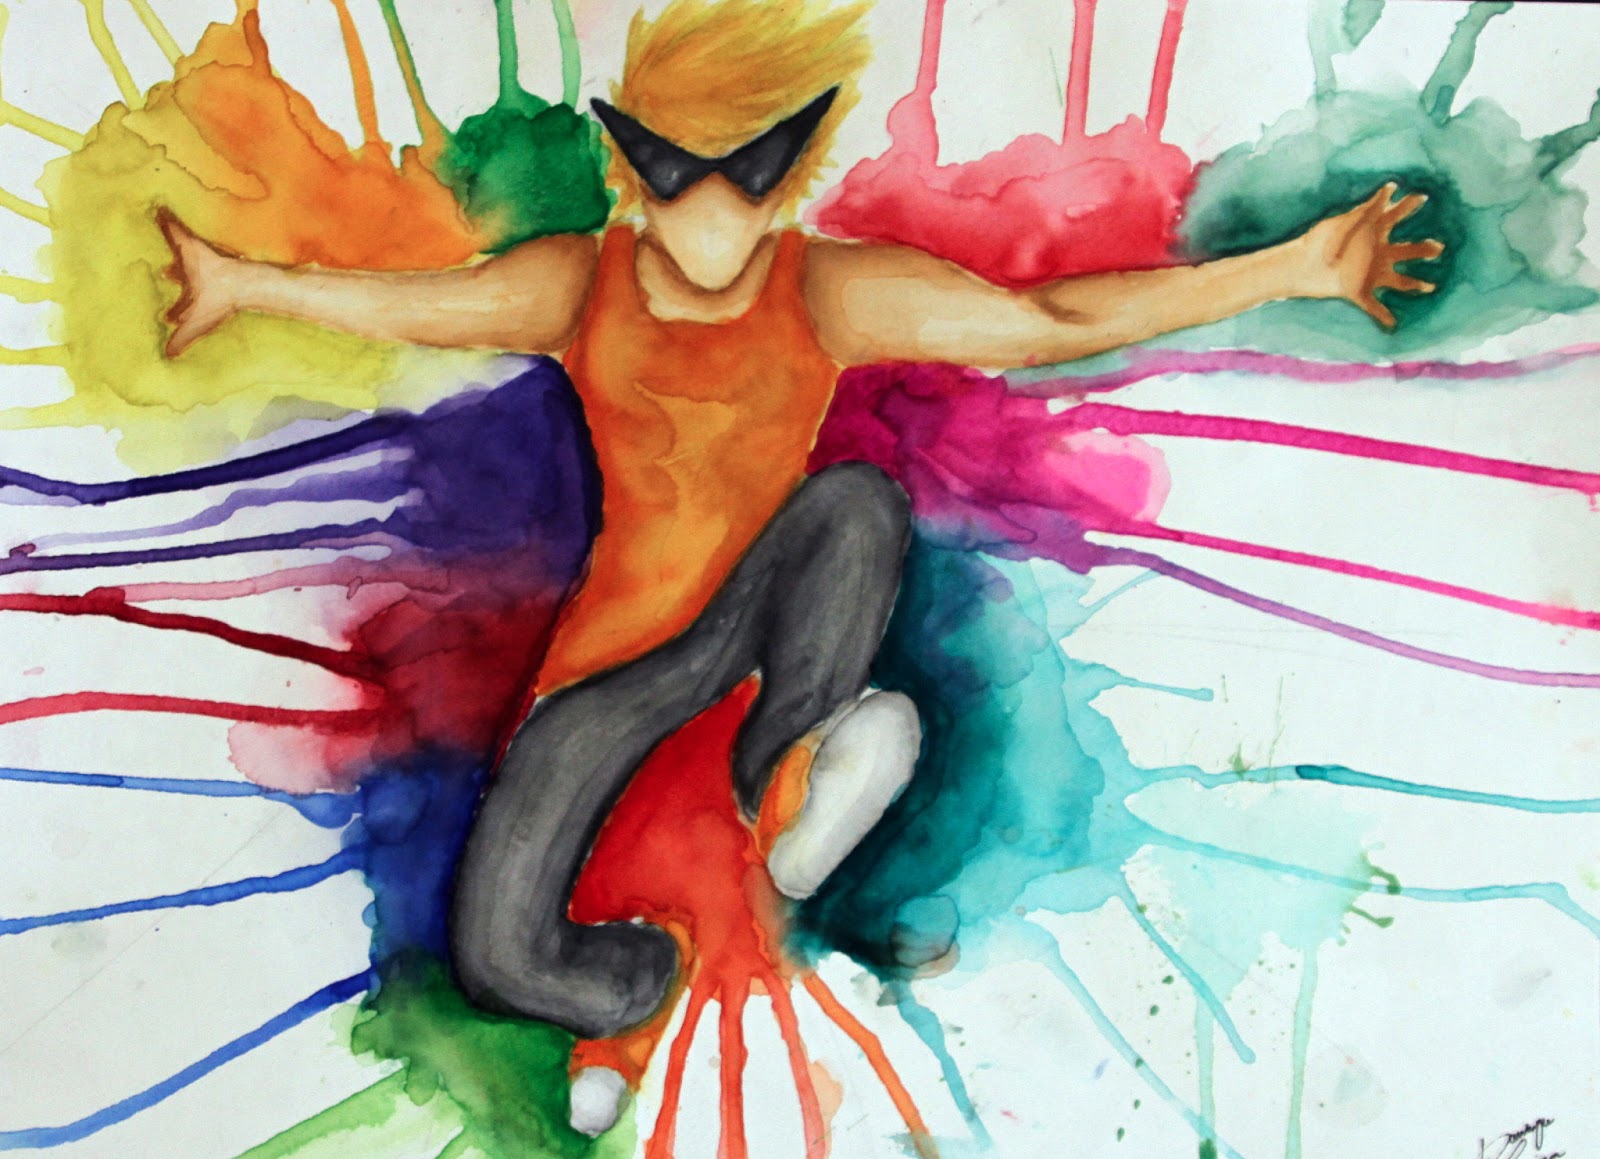 Student Art: Movement in Watercolor